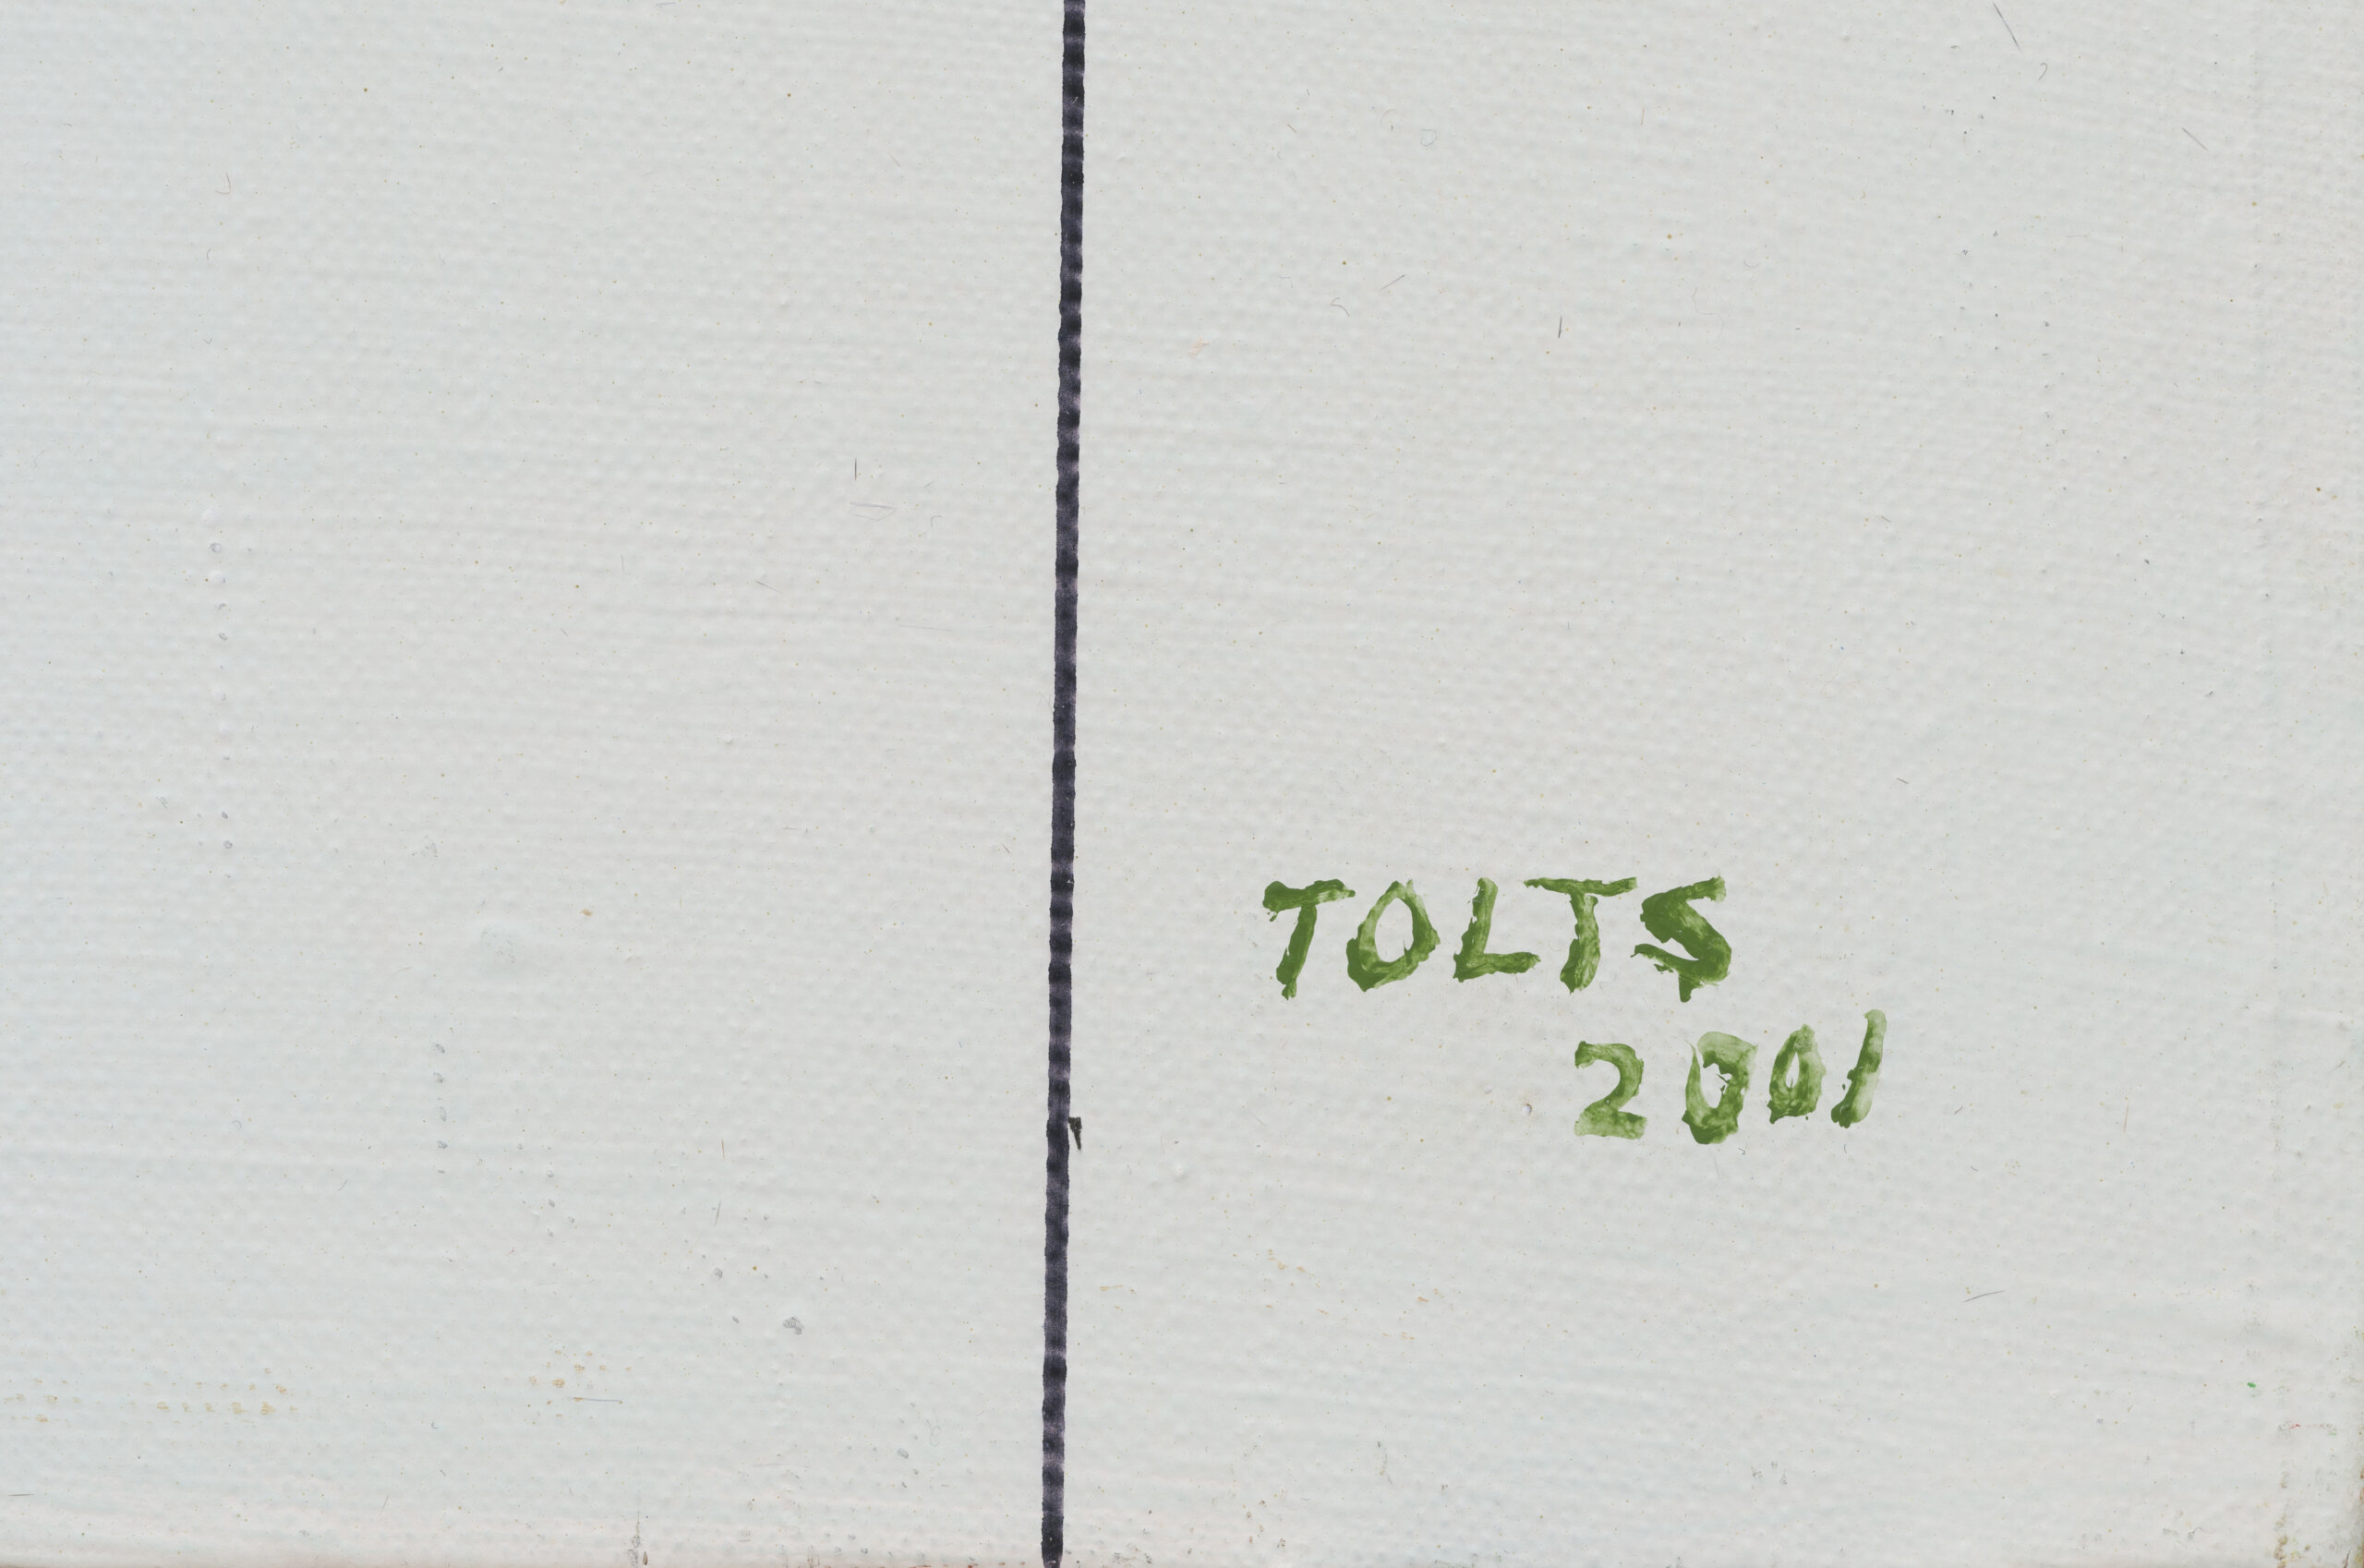 Andres Tolts “Saar”, 2001. 63,5 x 42 cm.